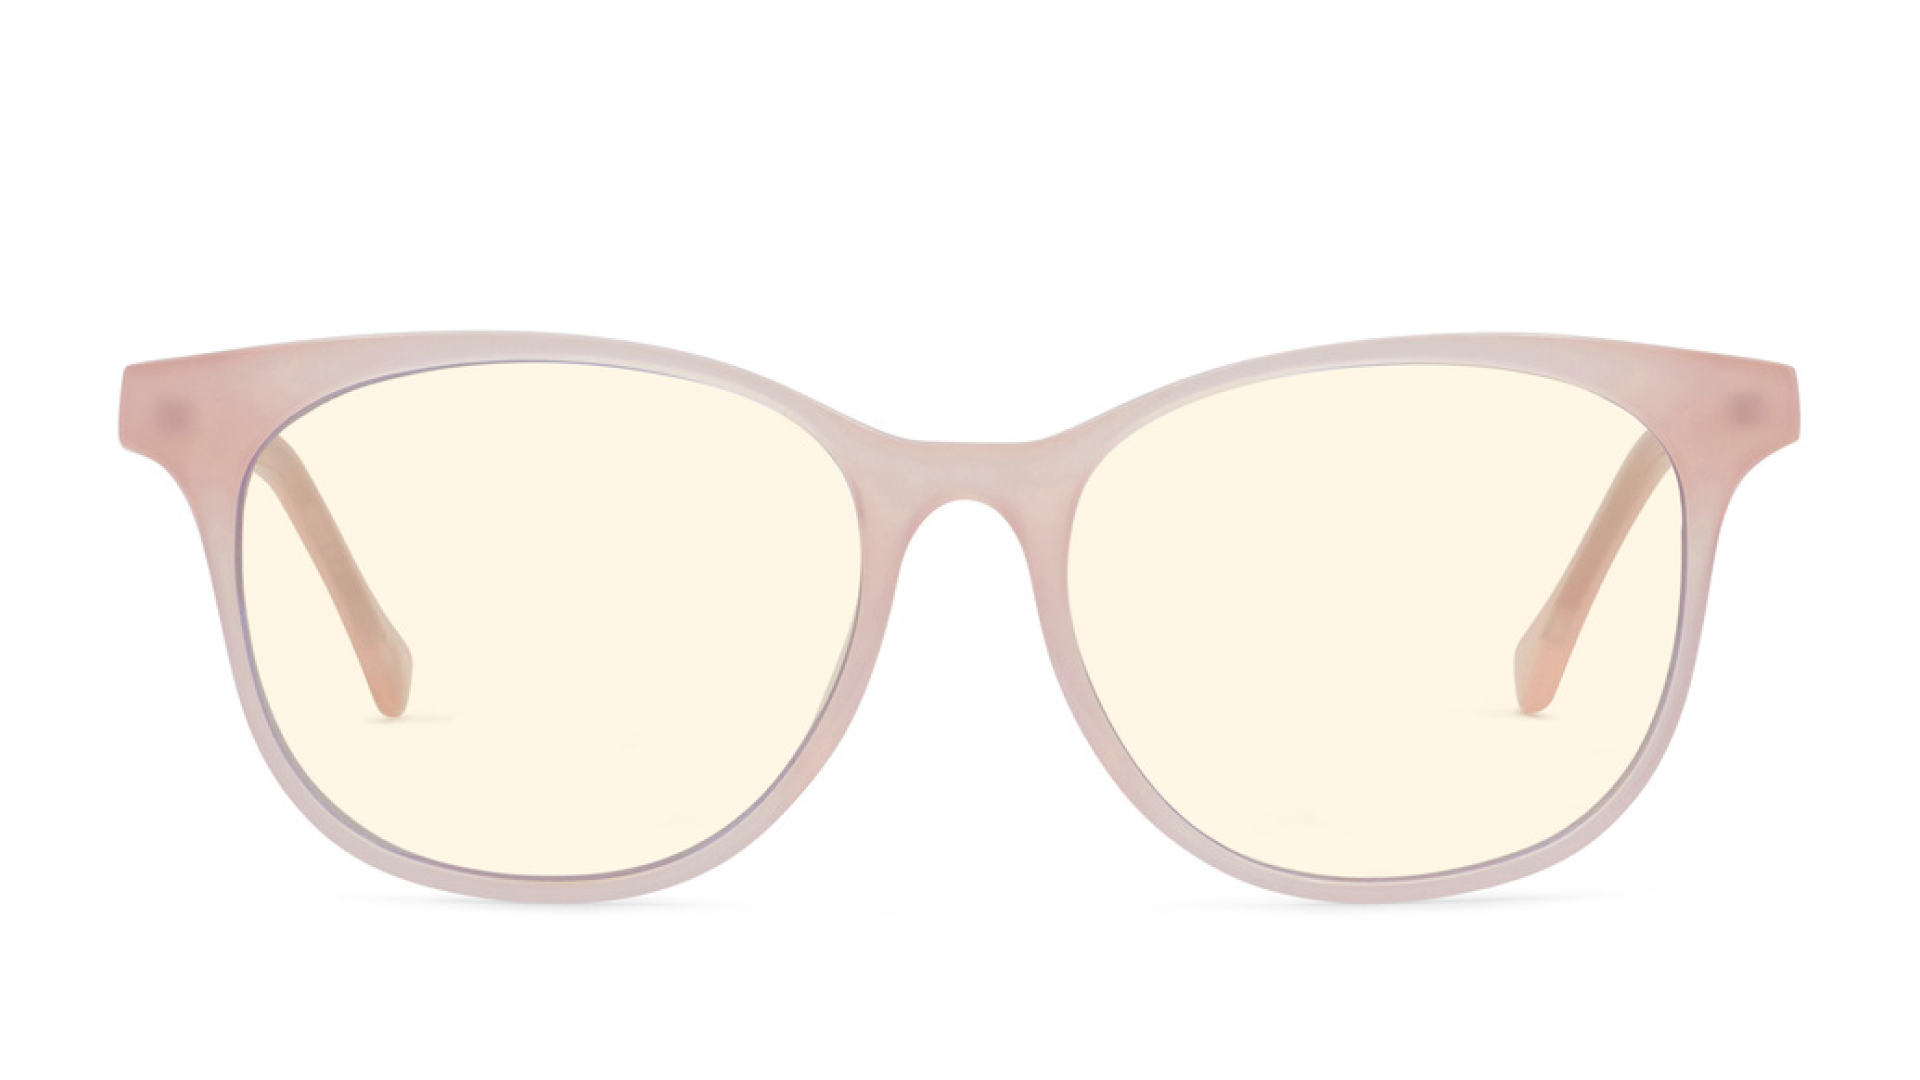 Felix Gray glasses